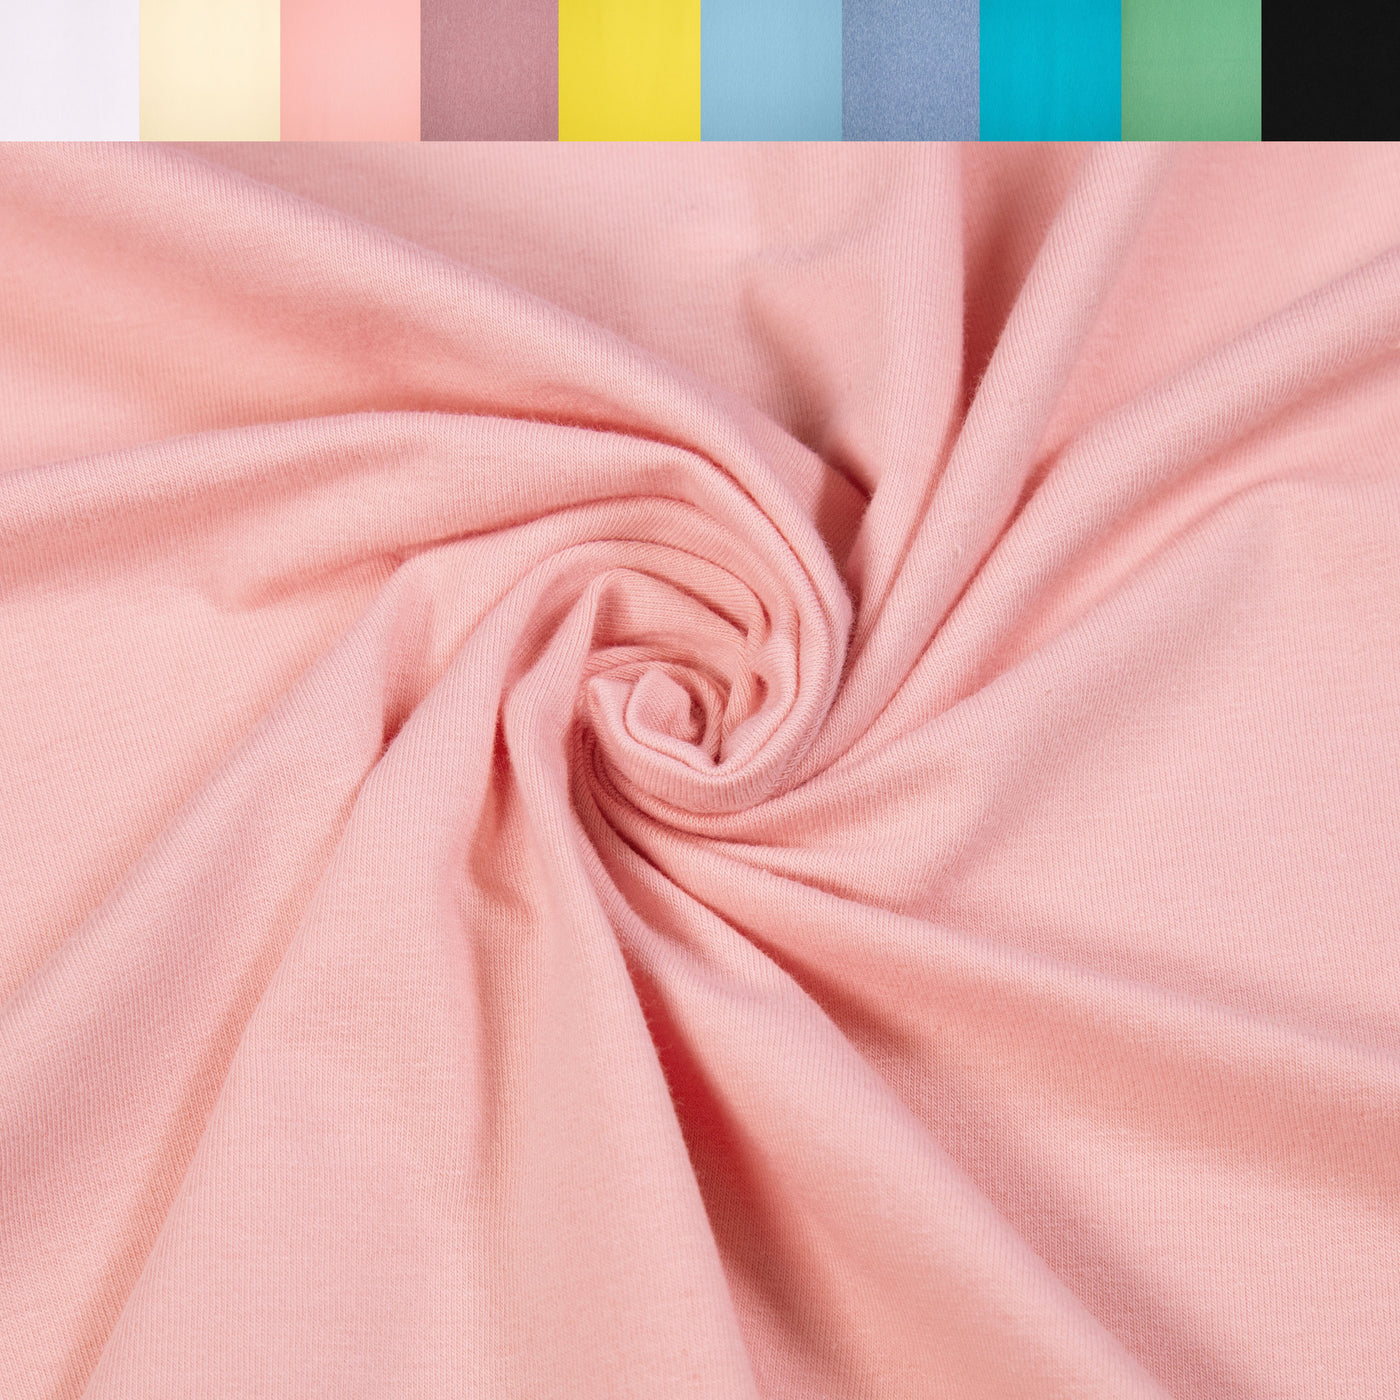 Cotton Lycra Spandex Knit Jersey by the yard -12 oz - Dusty Pink - FabricLA.com